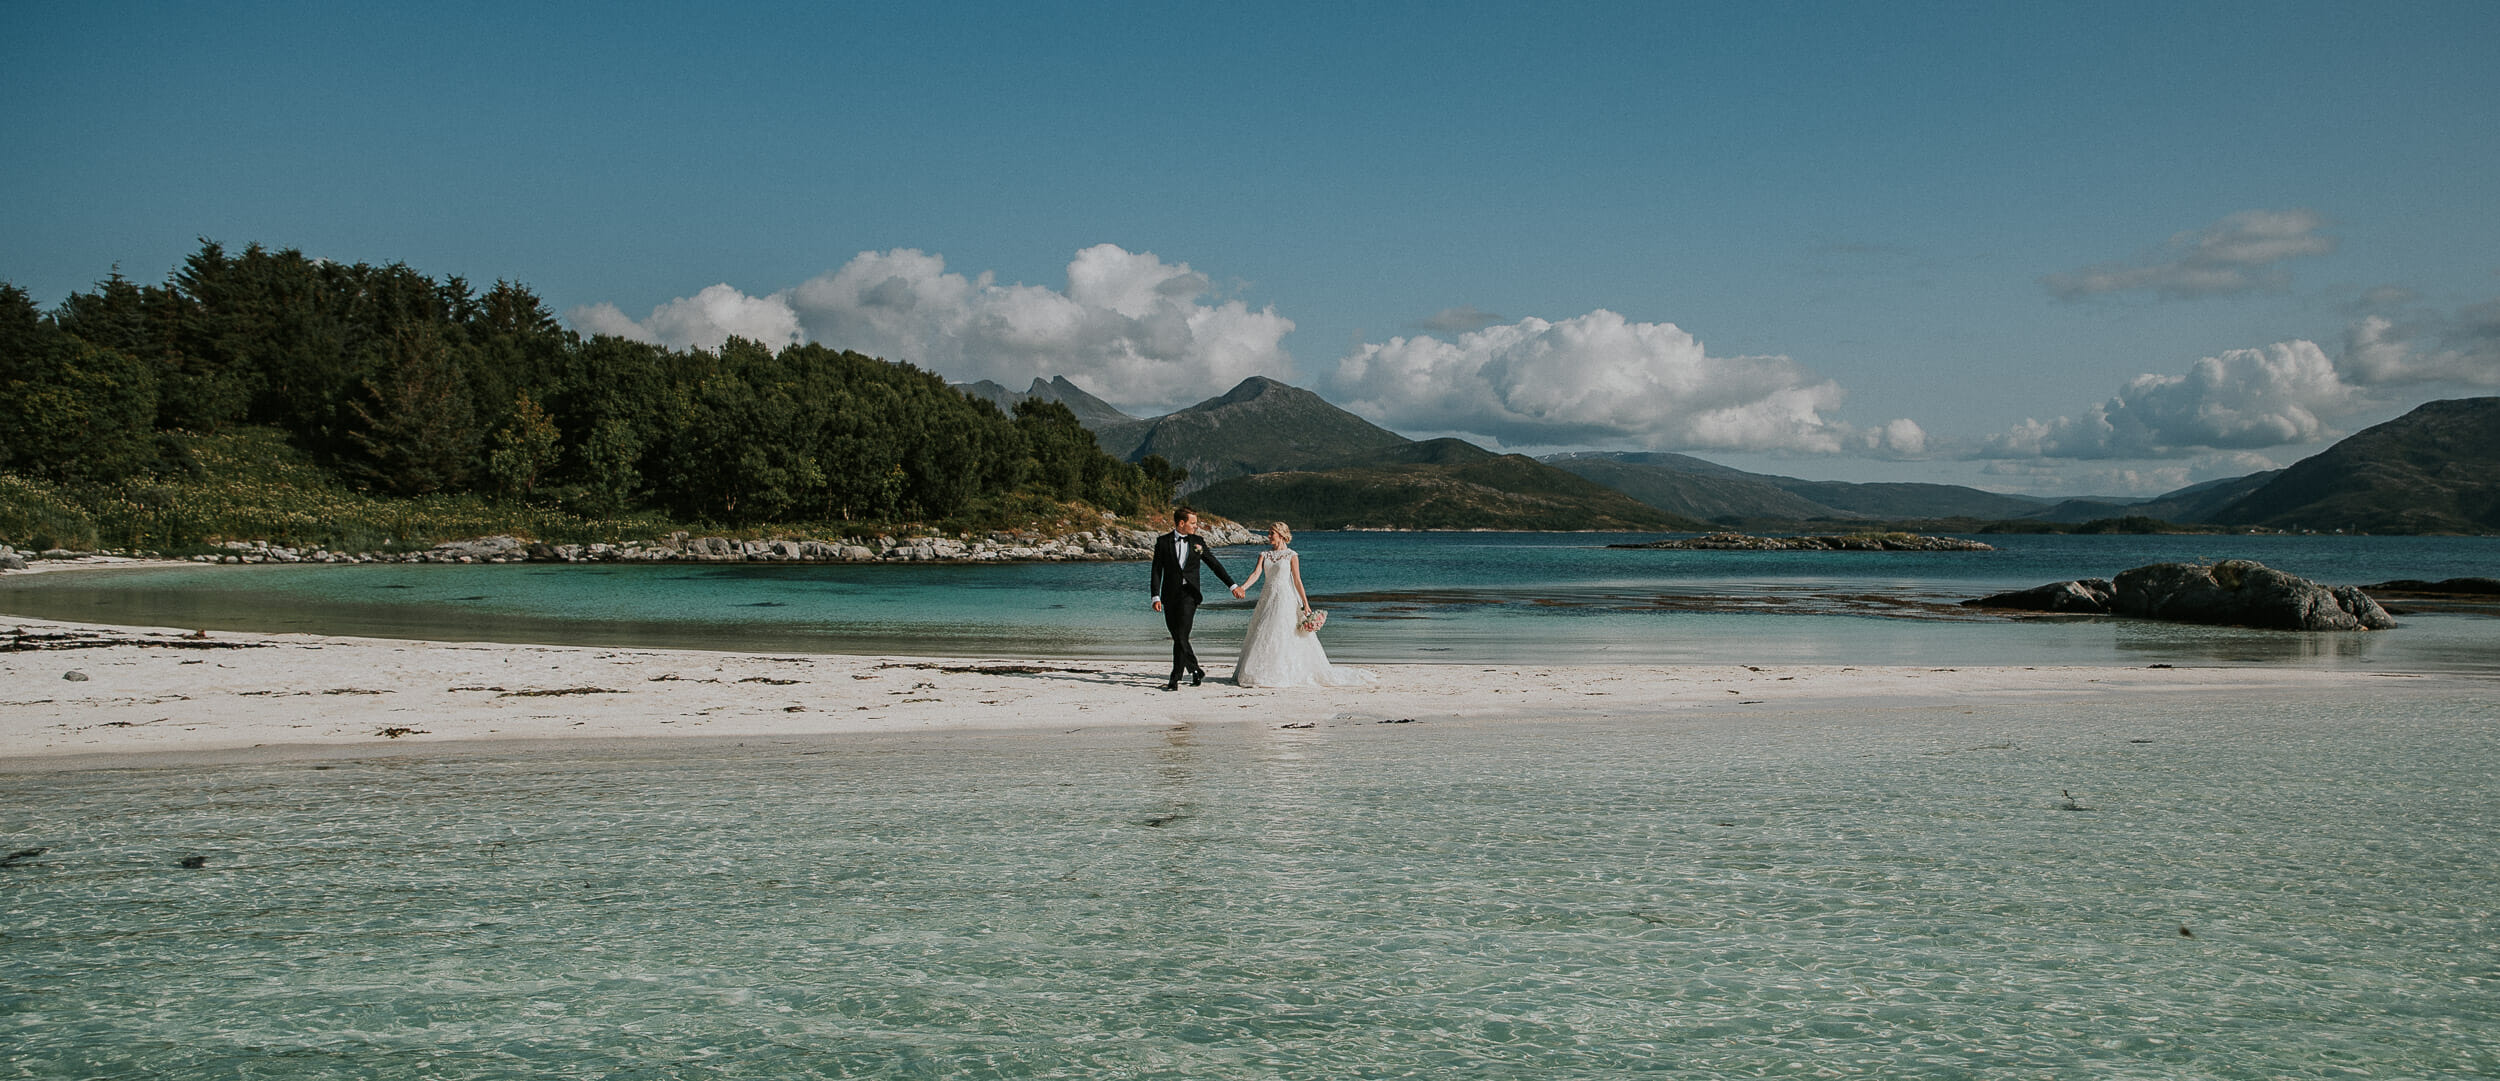 Bride and groom walking on amazing white beach of Senja island in Norway